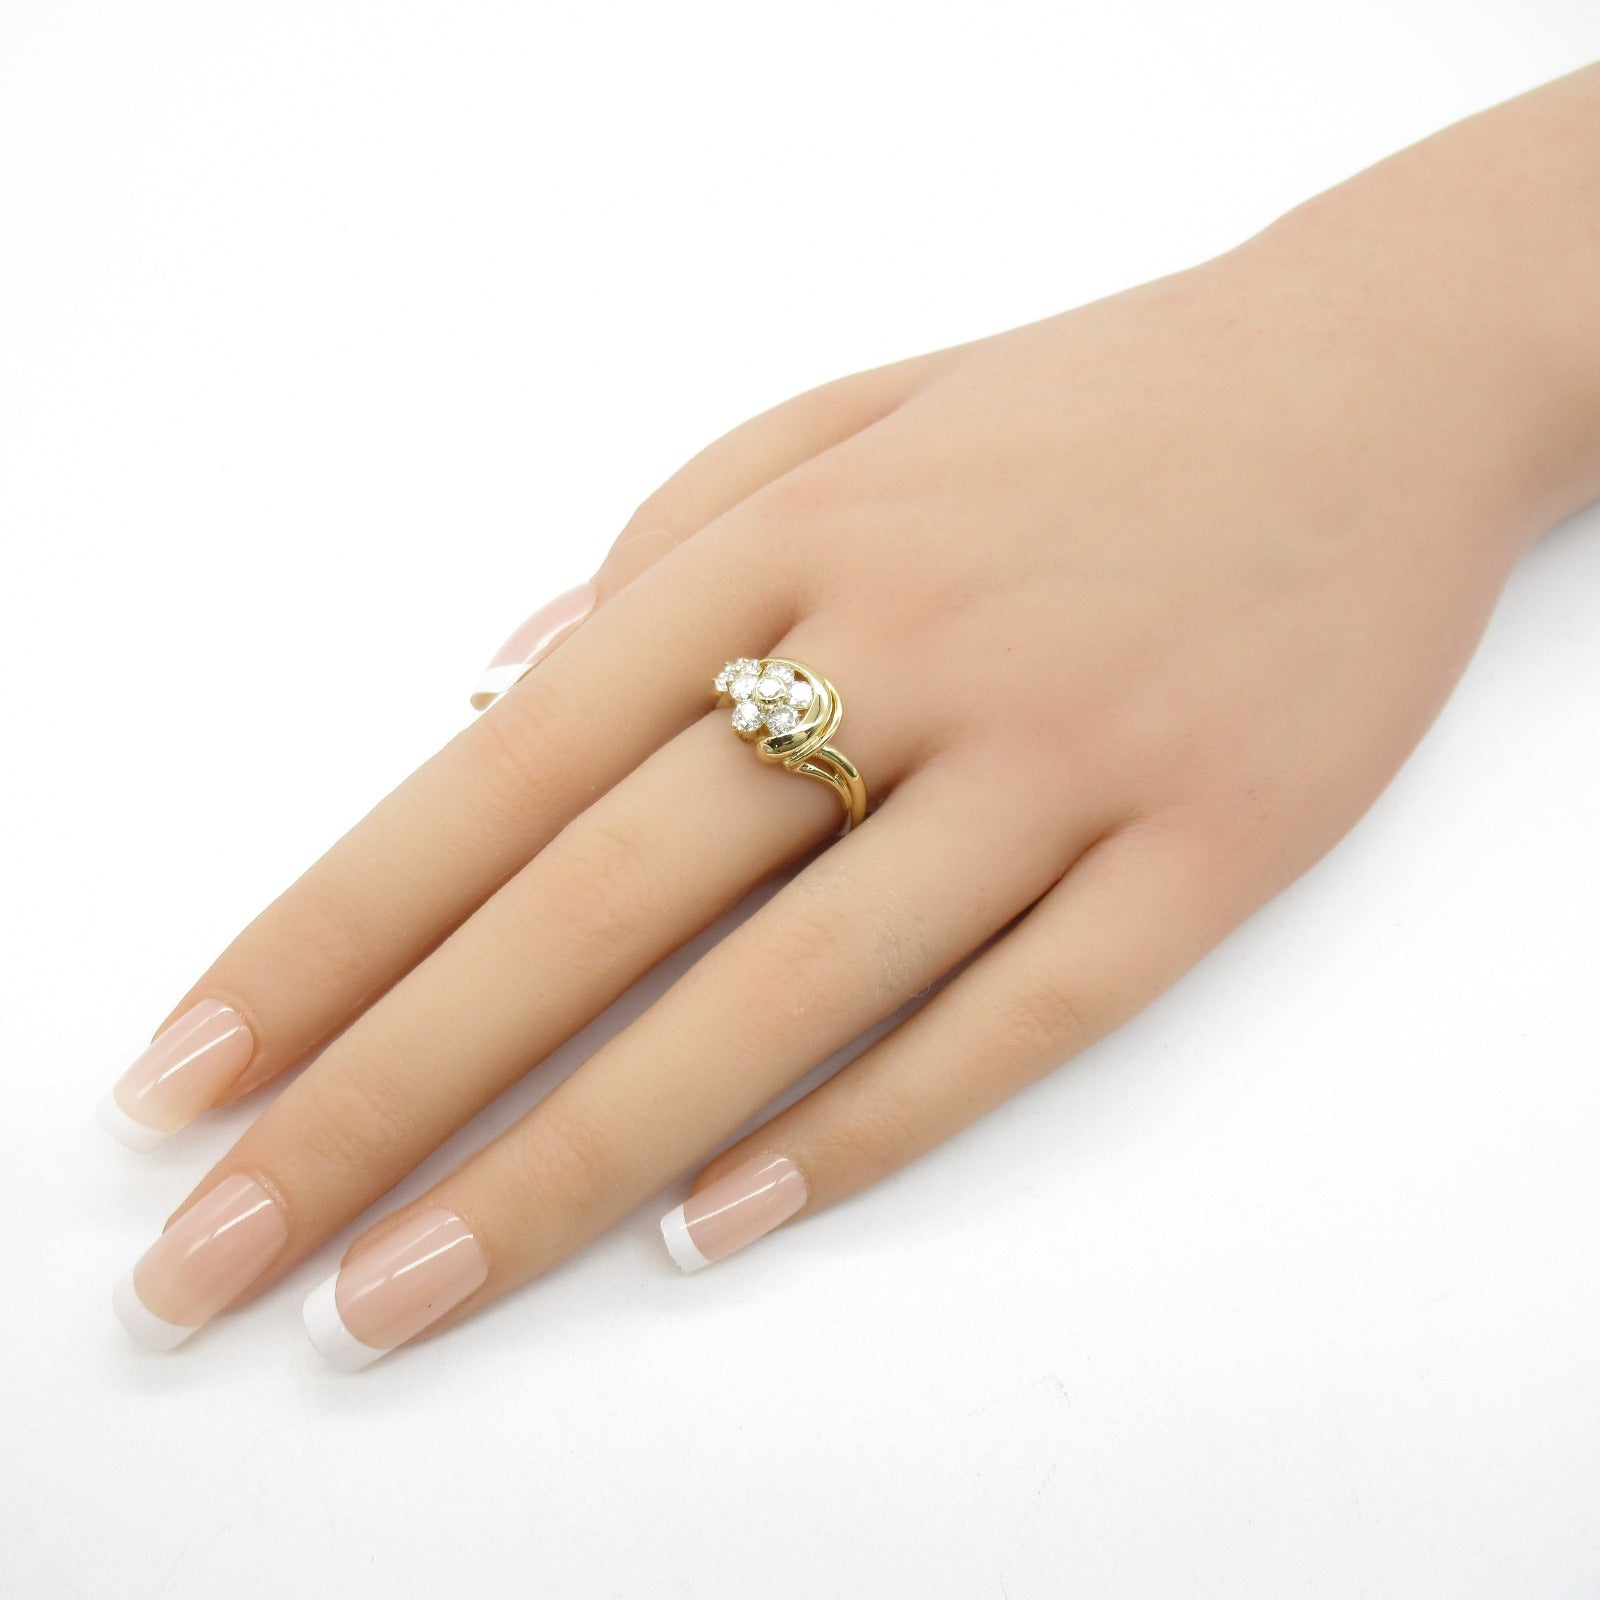 Jewelry Jewelry Diamond Ring Ring Ring Jewelry K18 (yellow g) Diamond  Clear Diamond 6.4g